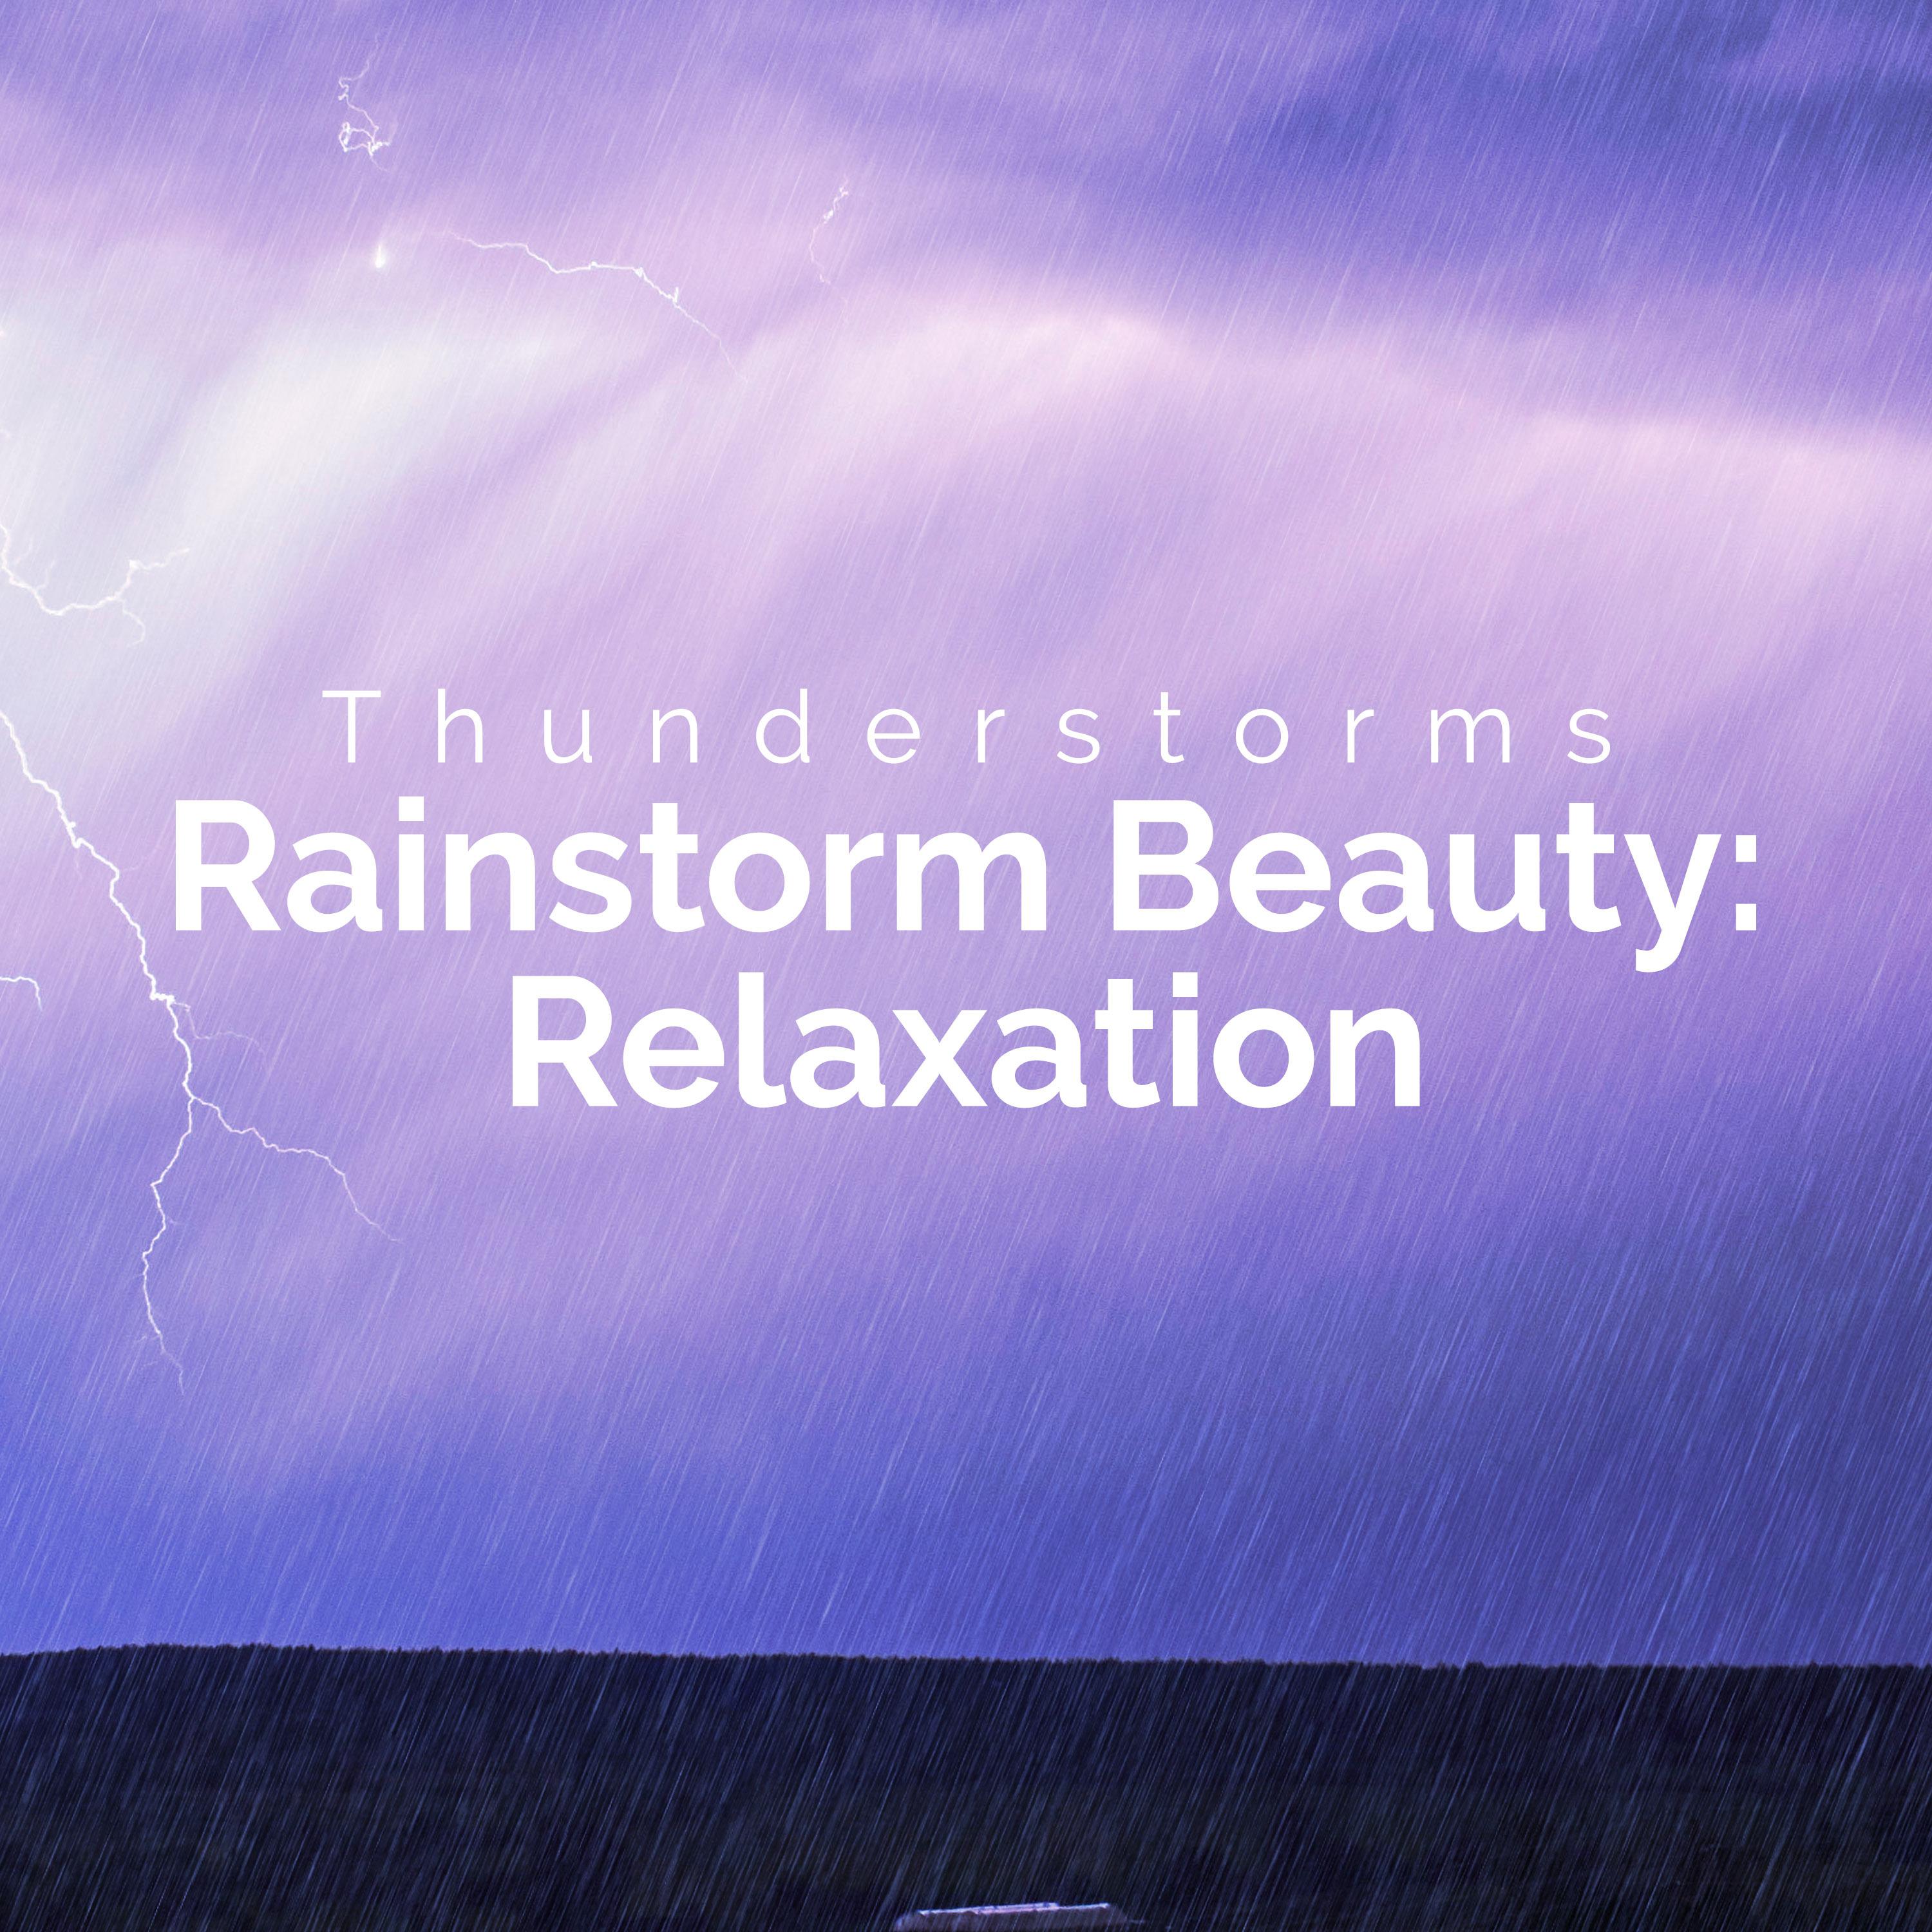 Rainstorm Beauty: Relaxation